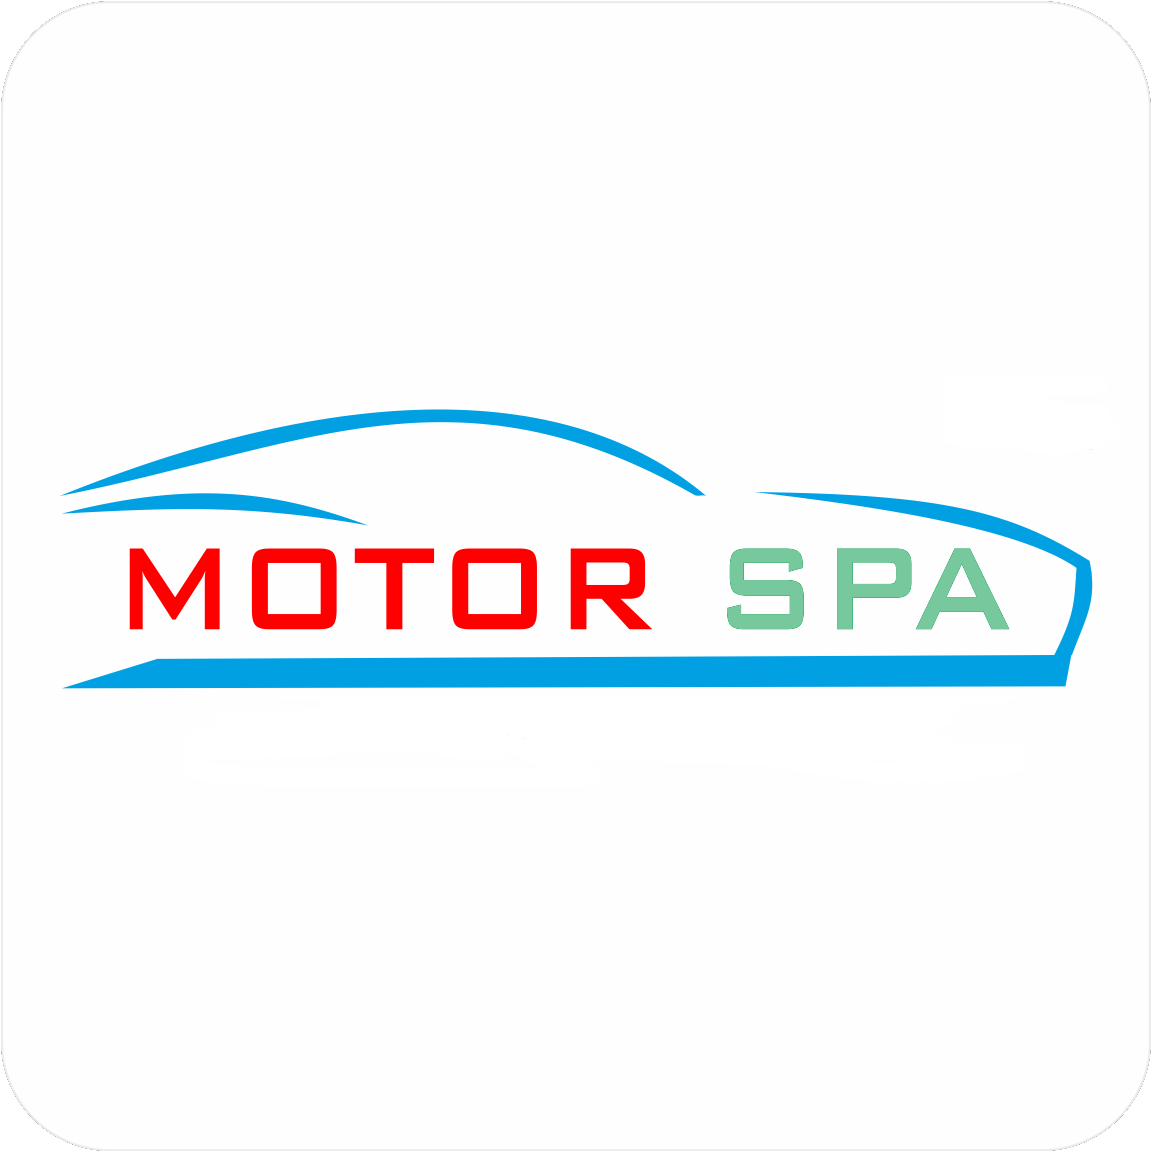 Motorspa logo